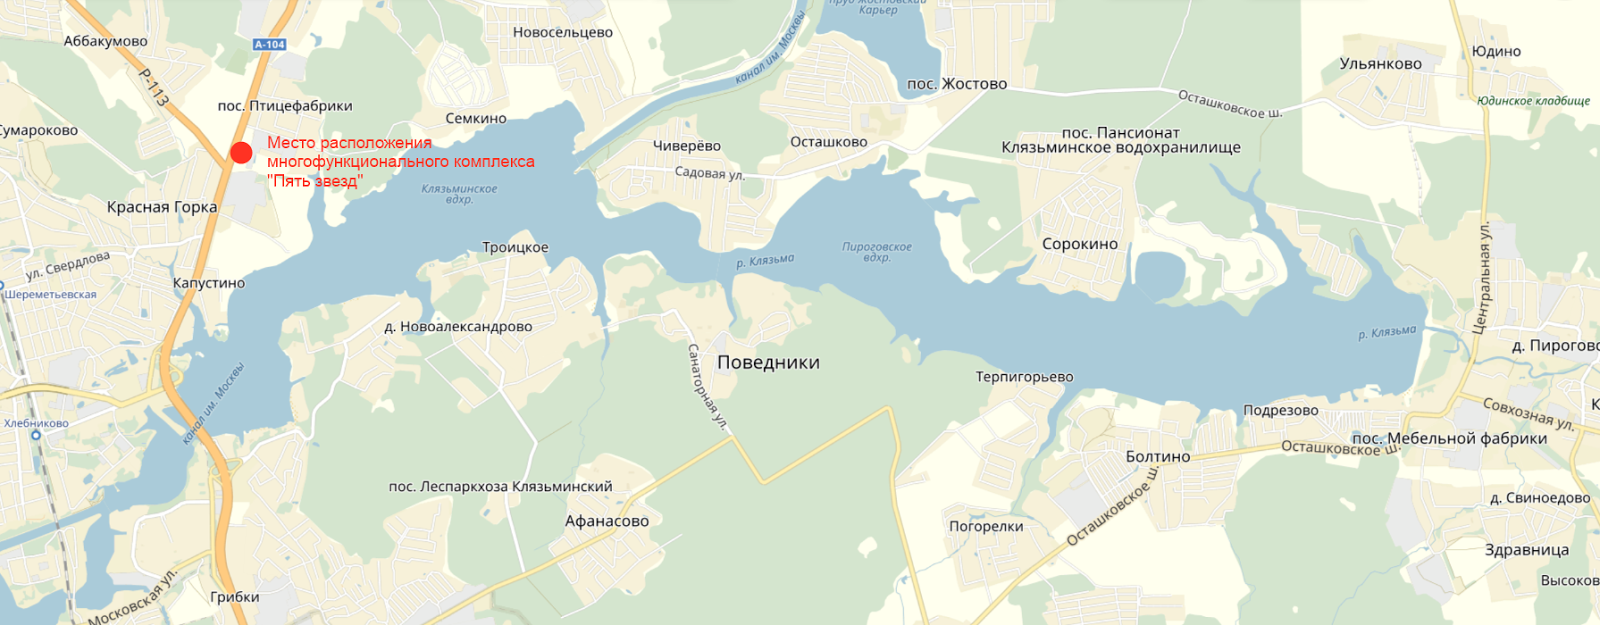 Водохранилище московской области на карте. Пироговское водохранилище Мытищи на карте. Карта Клязьминского и Пироговского водохранилища. Глубины Клязьминского водохранилища. Клязьминское водохранилище на карте.